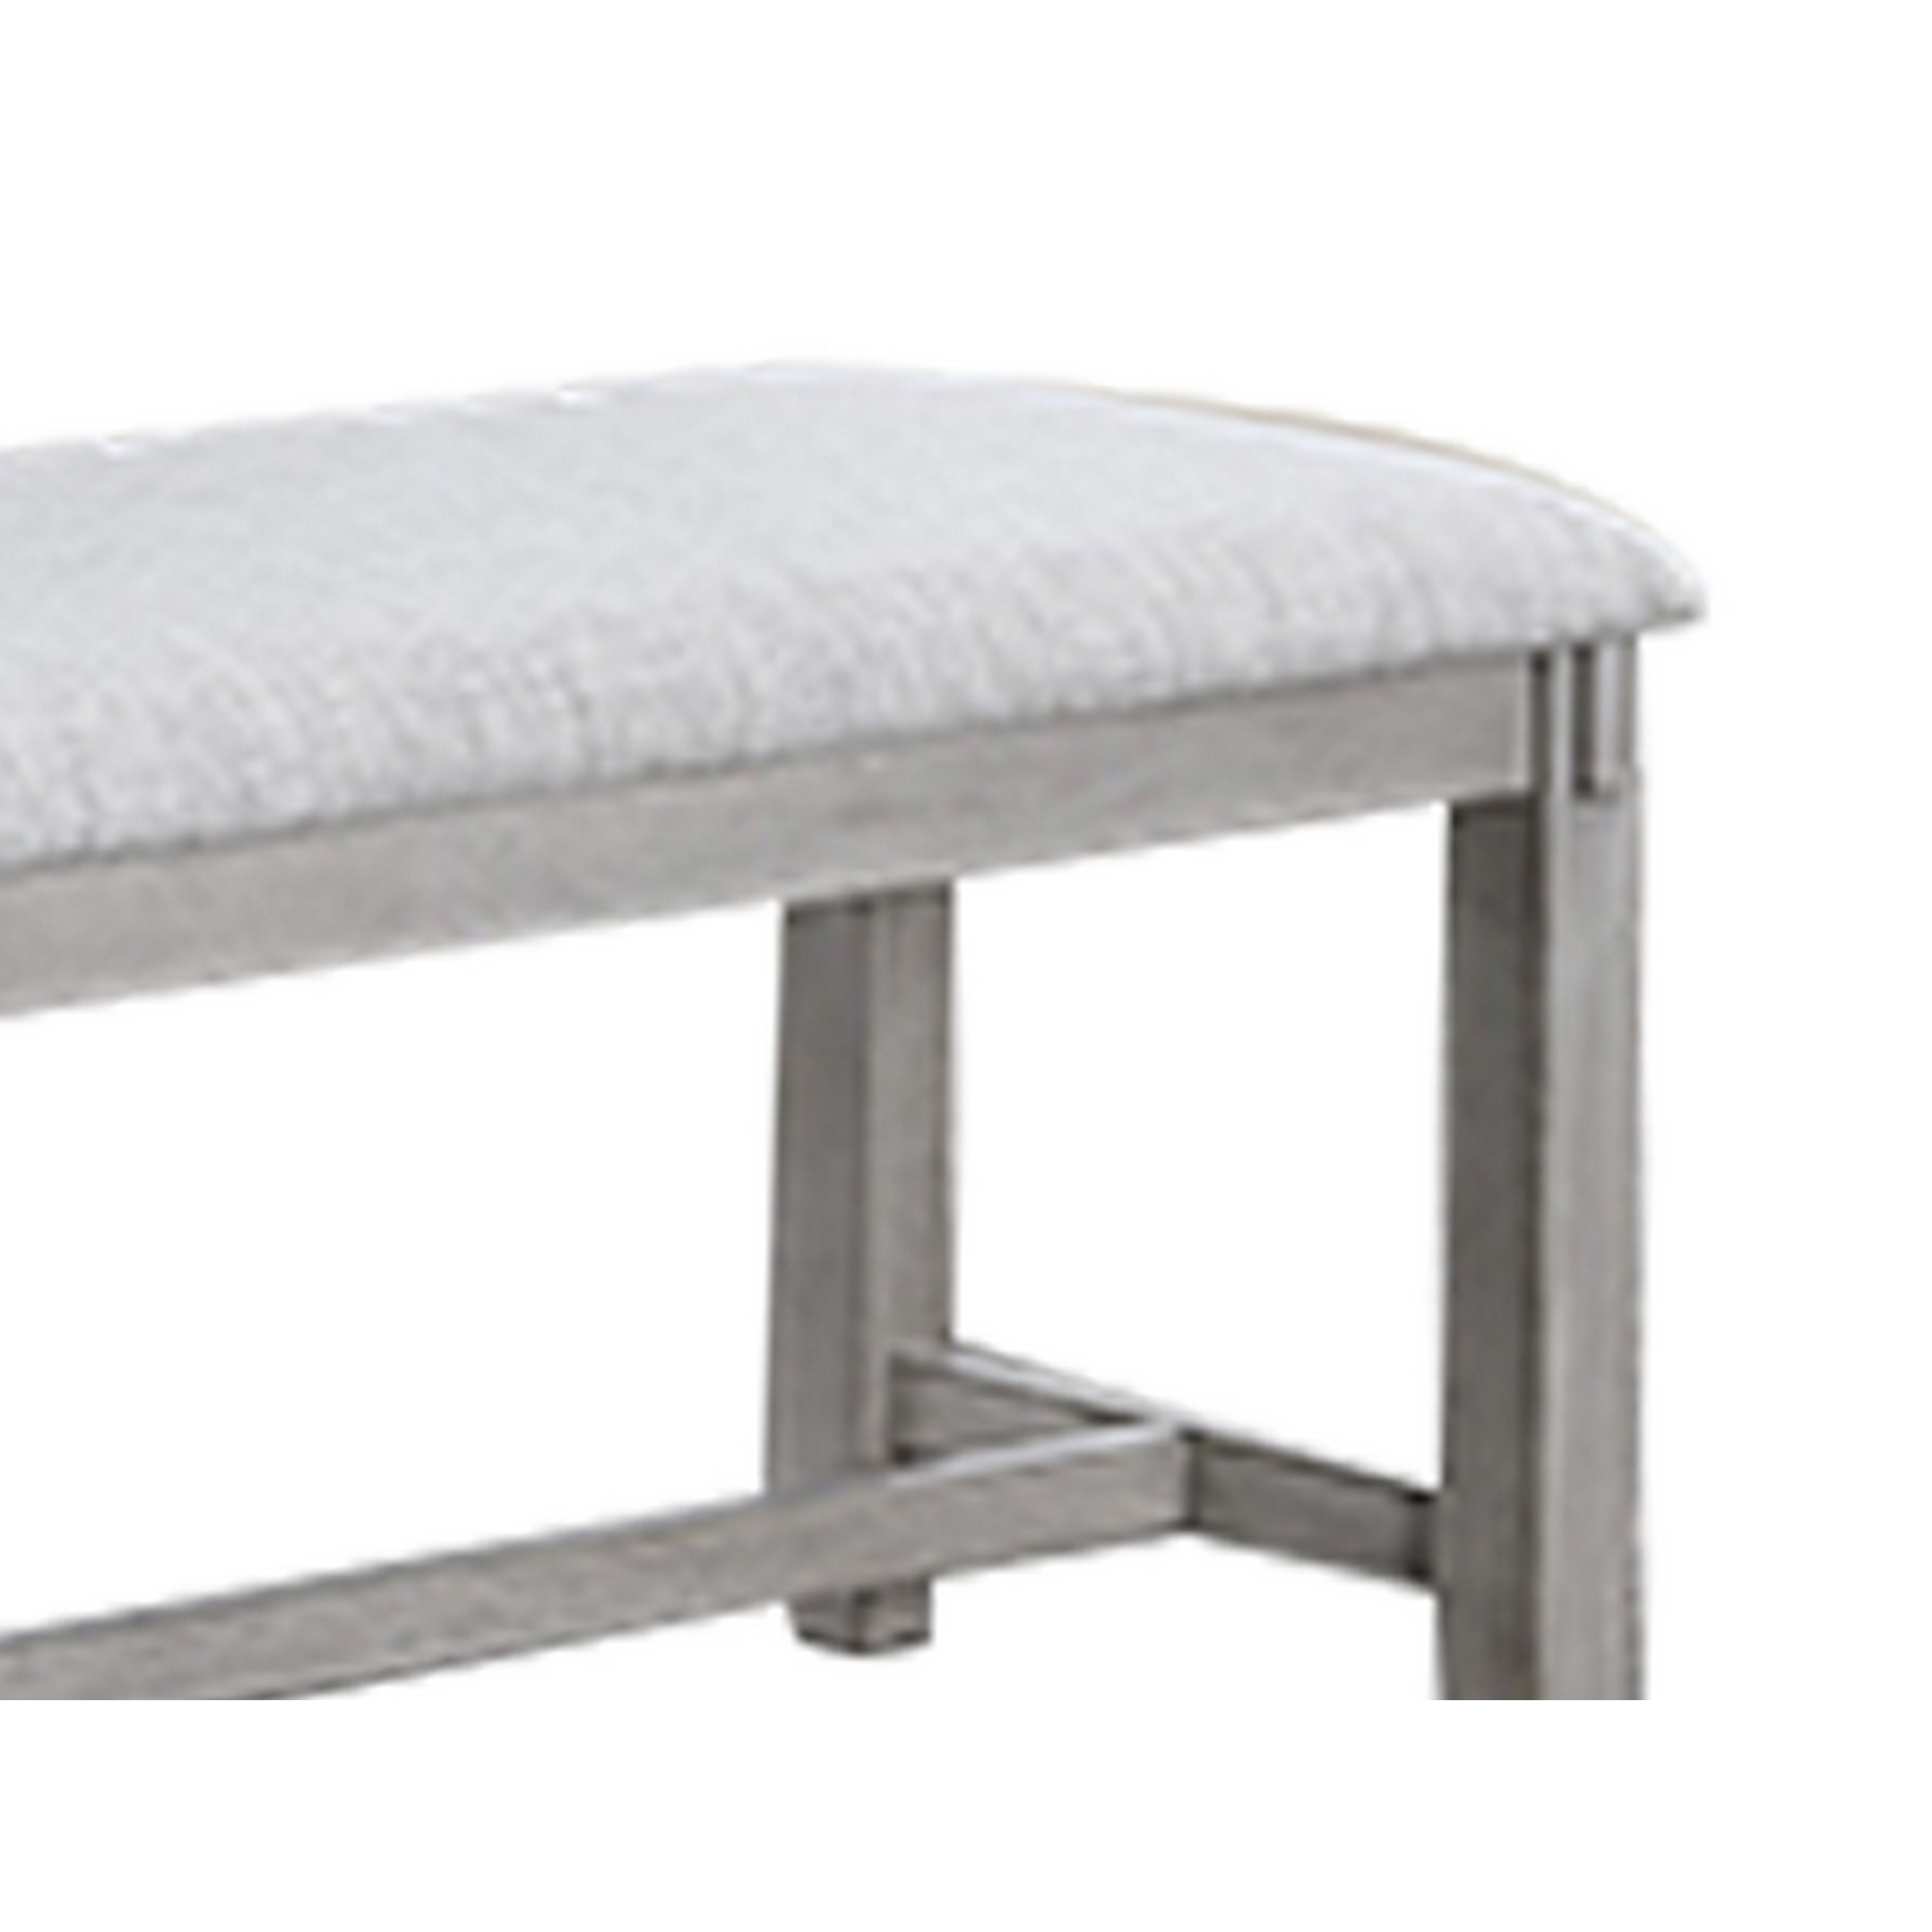 Peter 50 Inch Dining Bench, Fabric Upholstery, Cushioned, Driftwood Gray -Saltoro Sherpi